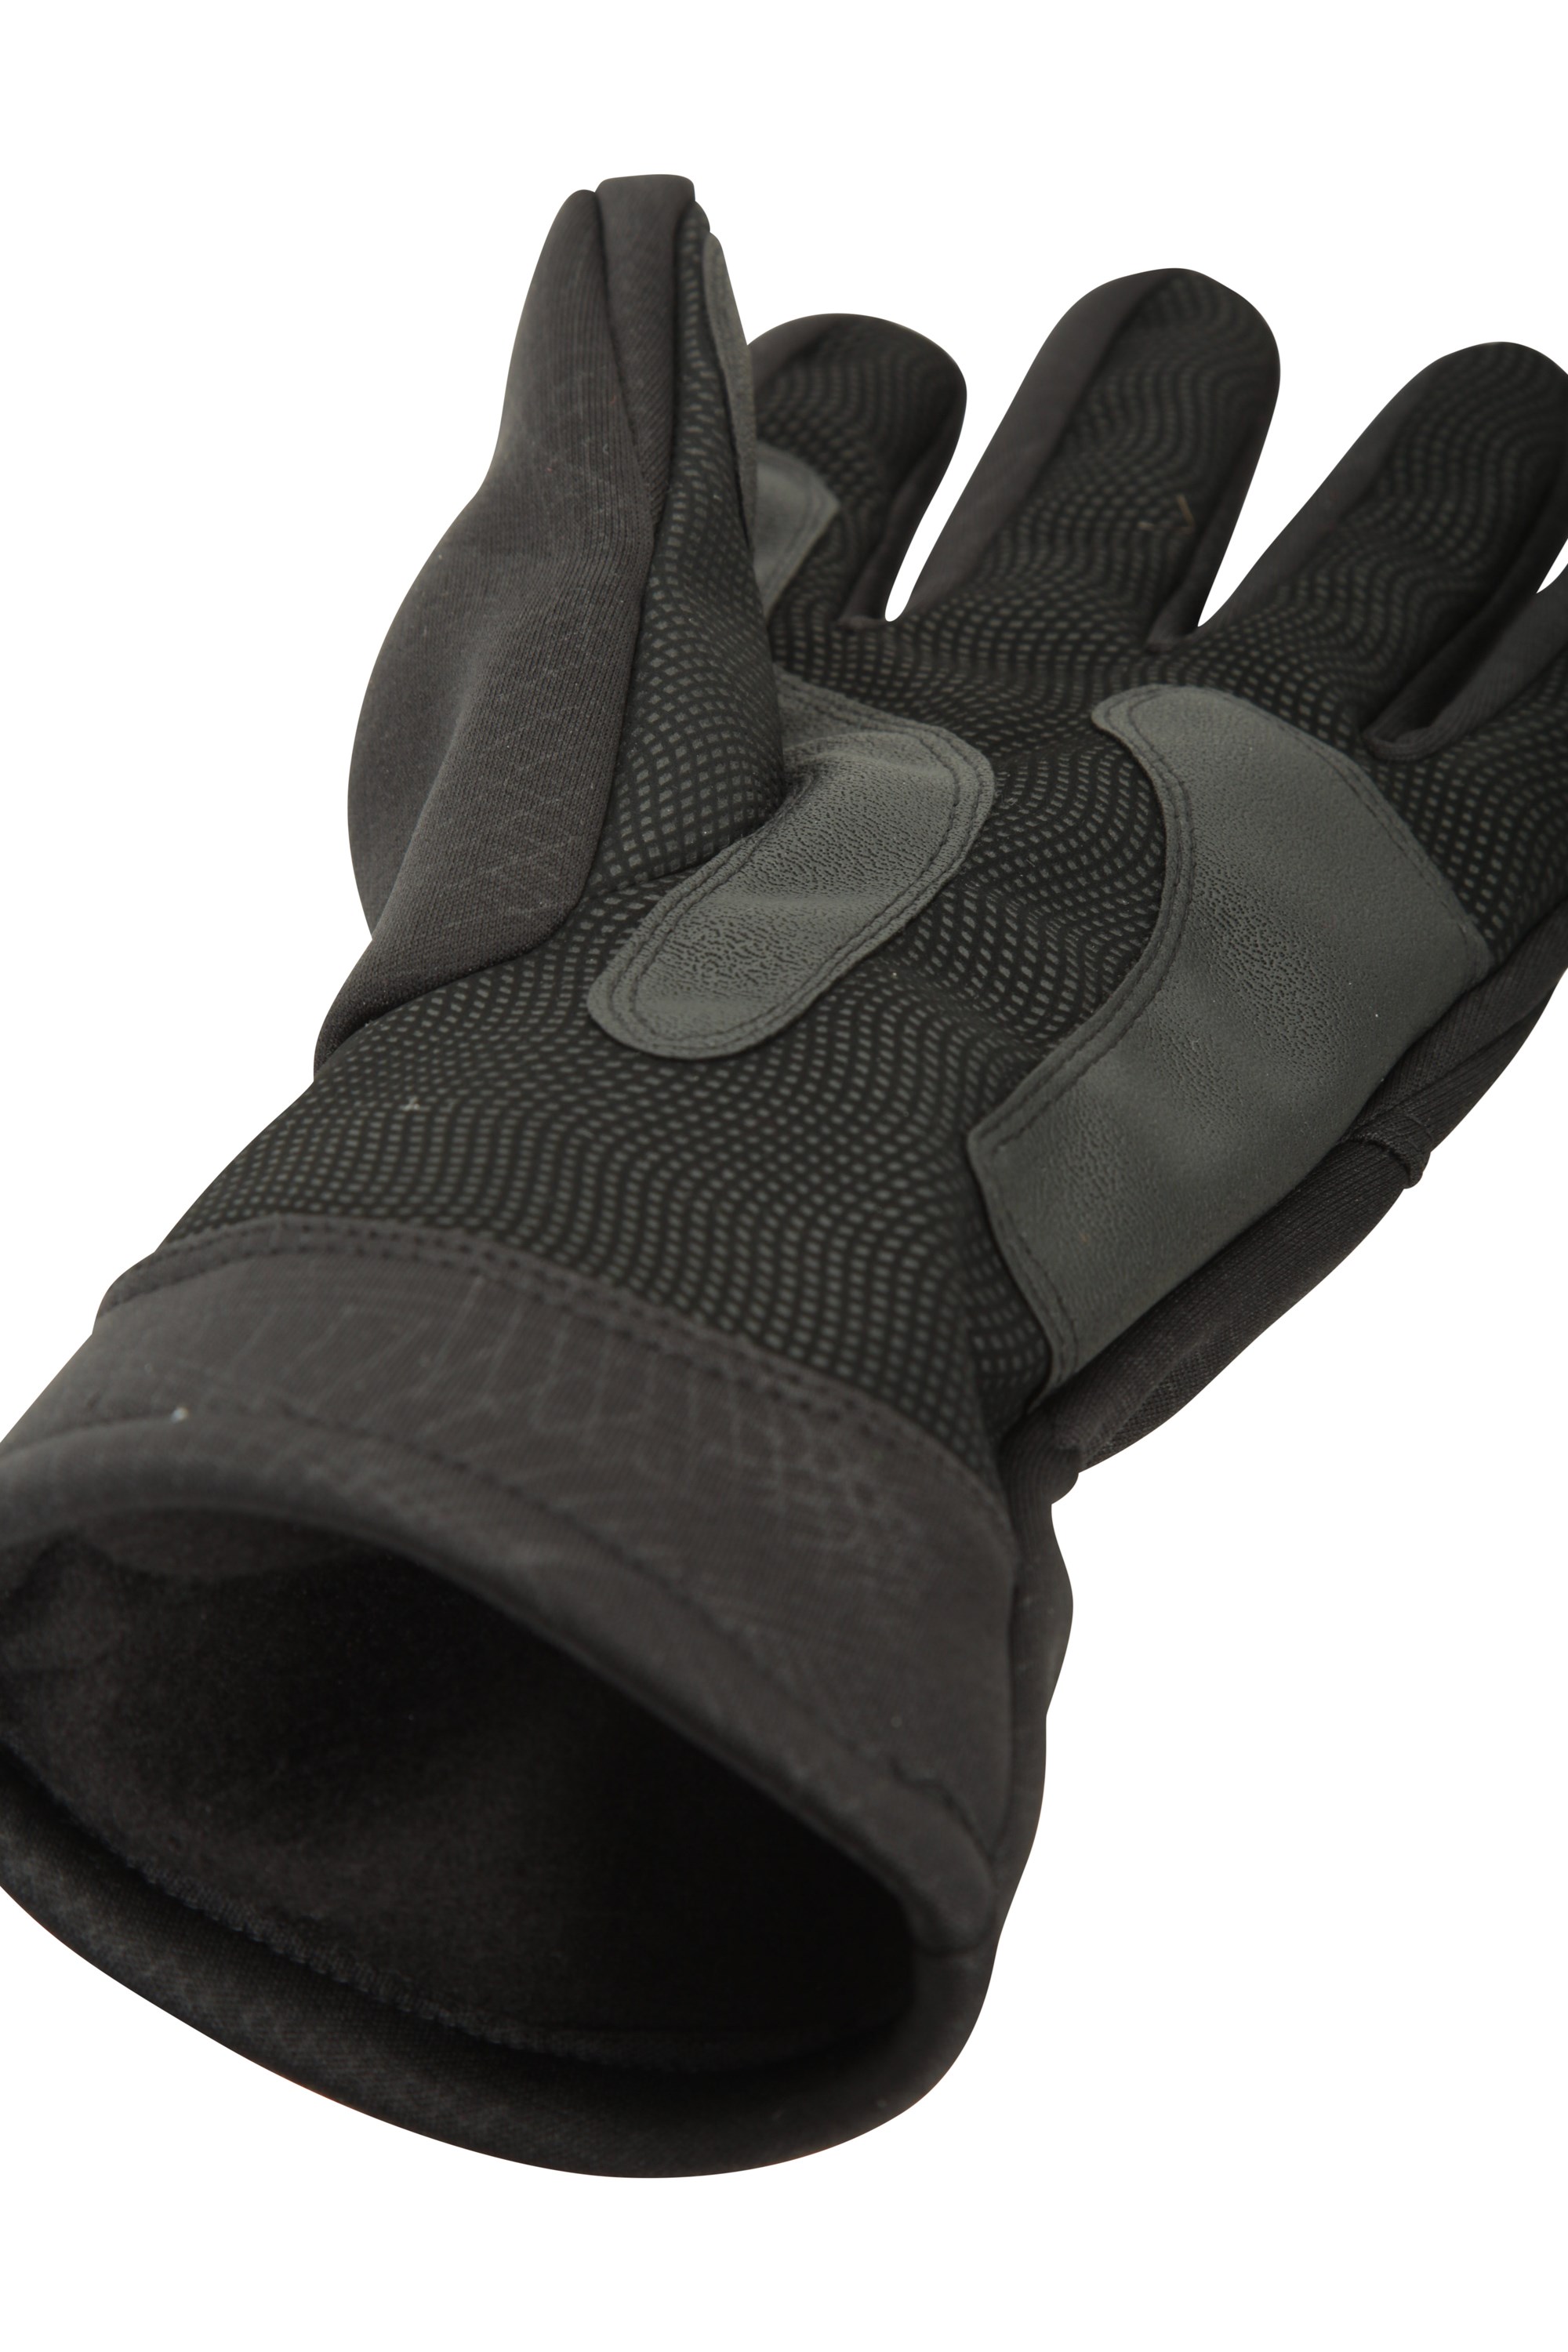 99185 Oil Shield®, 18 High Temp Insulated Neoprene Gloves - Mens Sizes S-XL